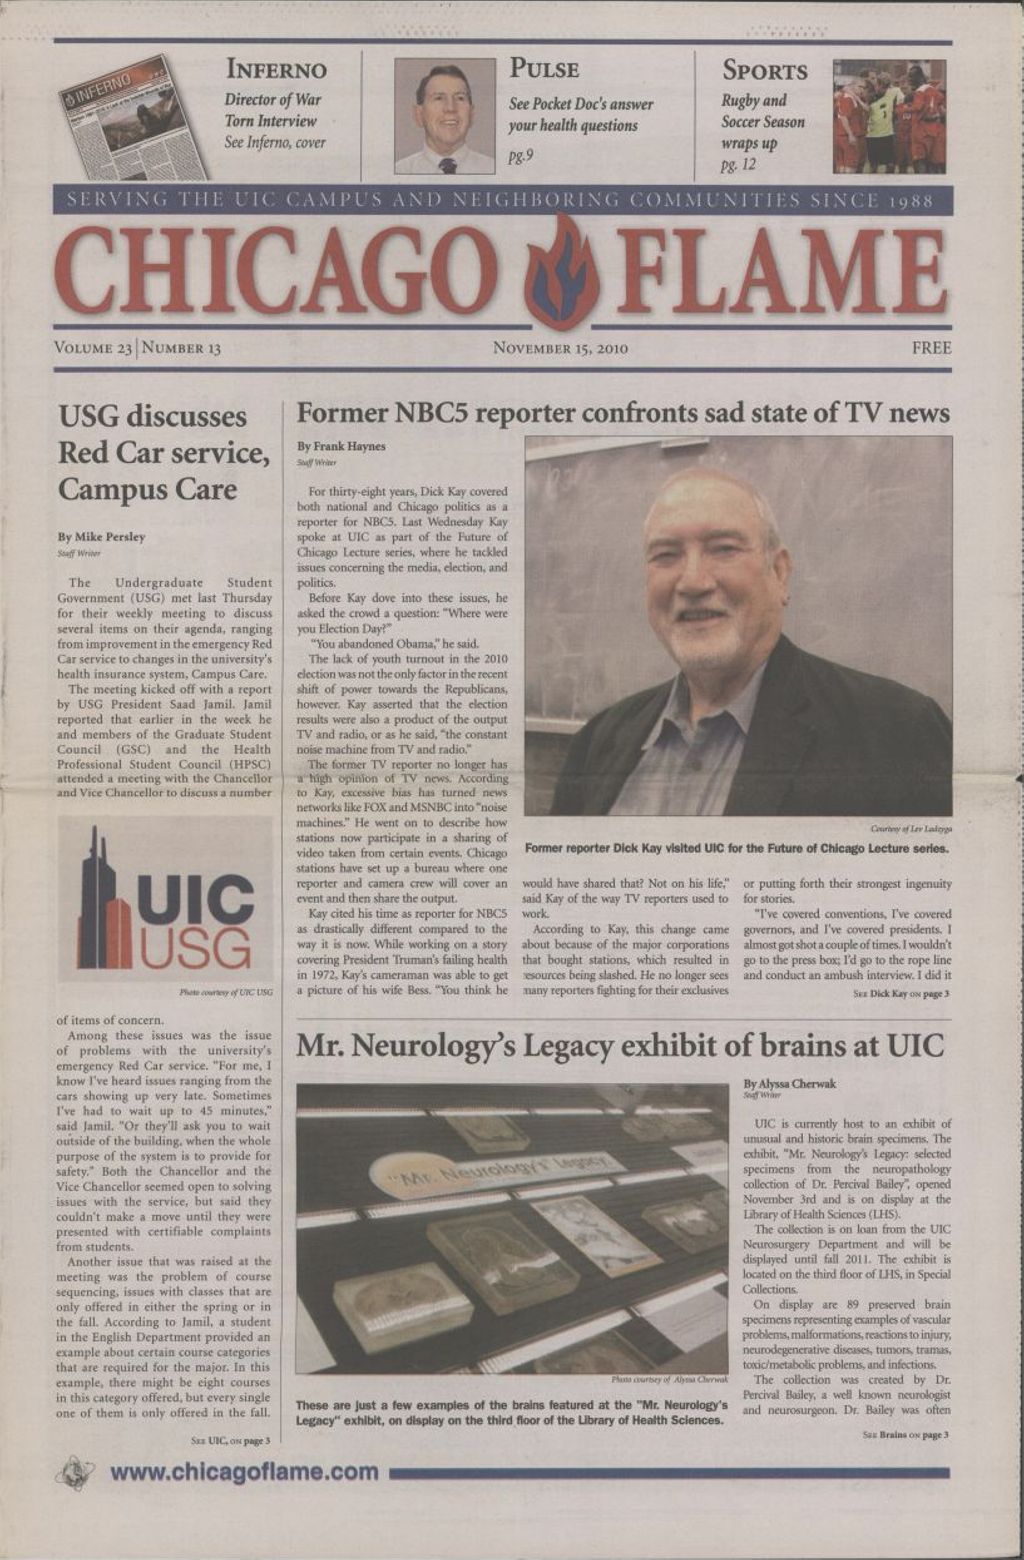 Chicago Flame (November 15, 2010)